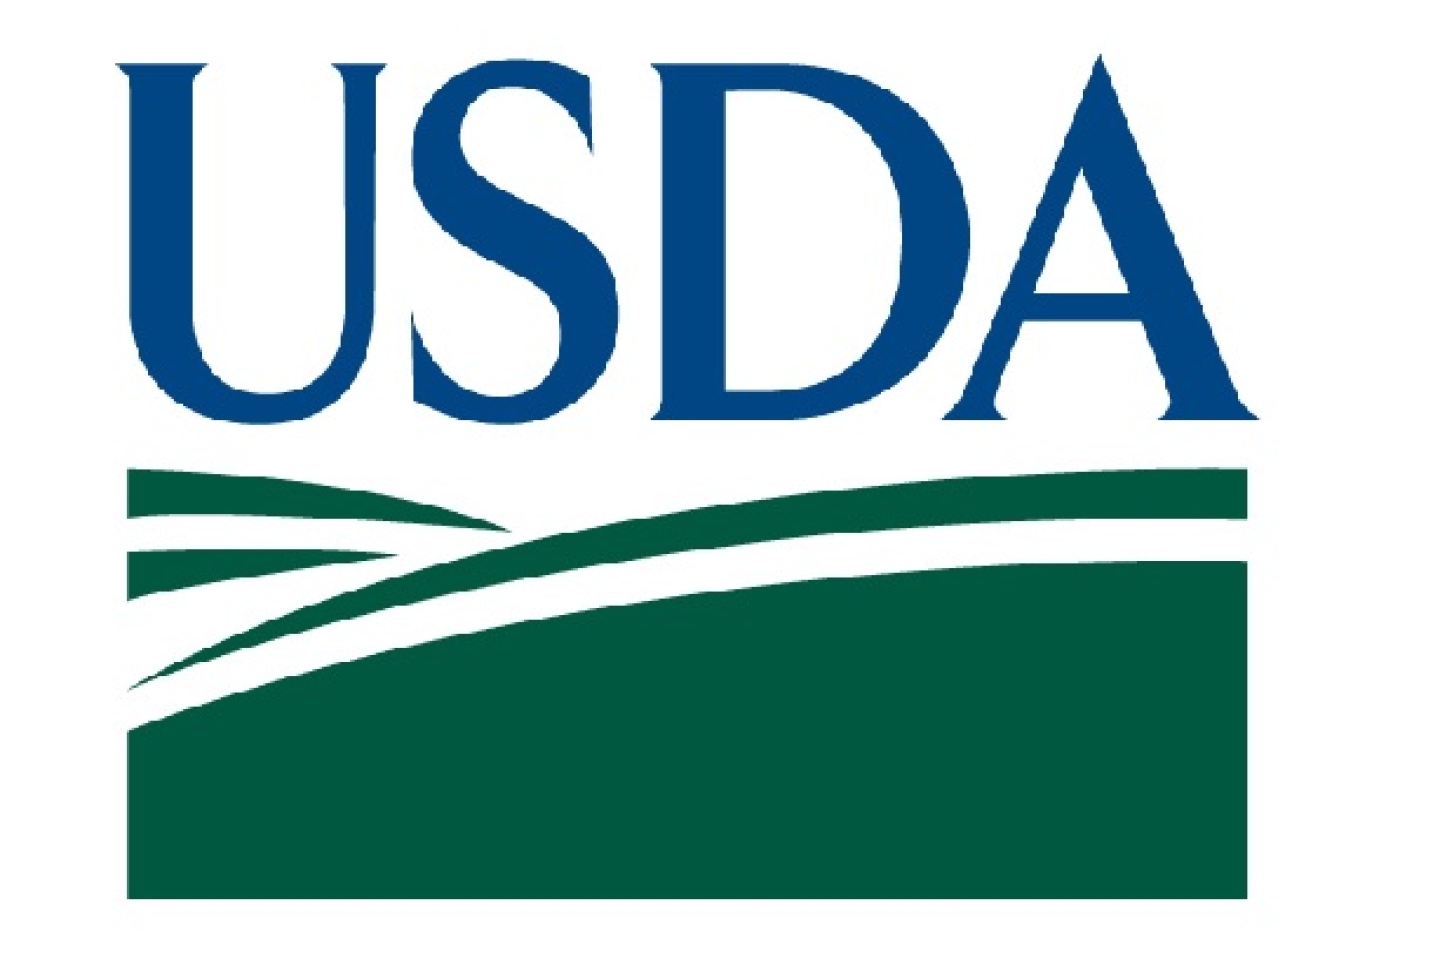 USDA seal